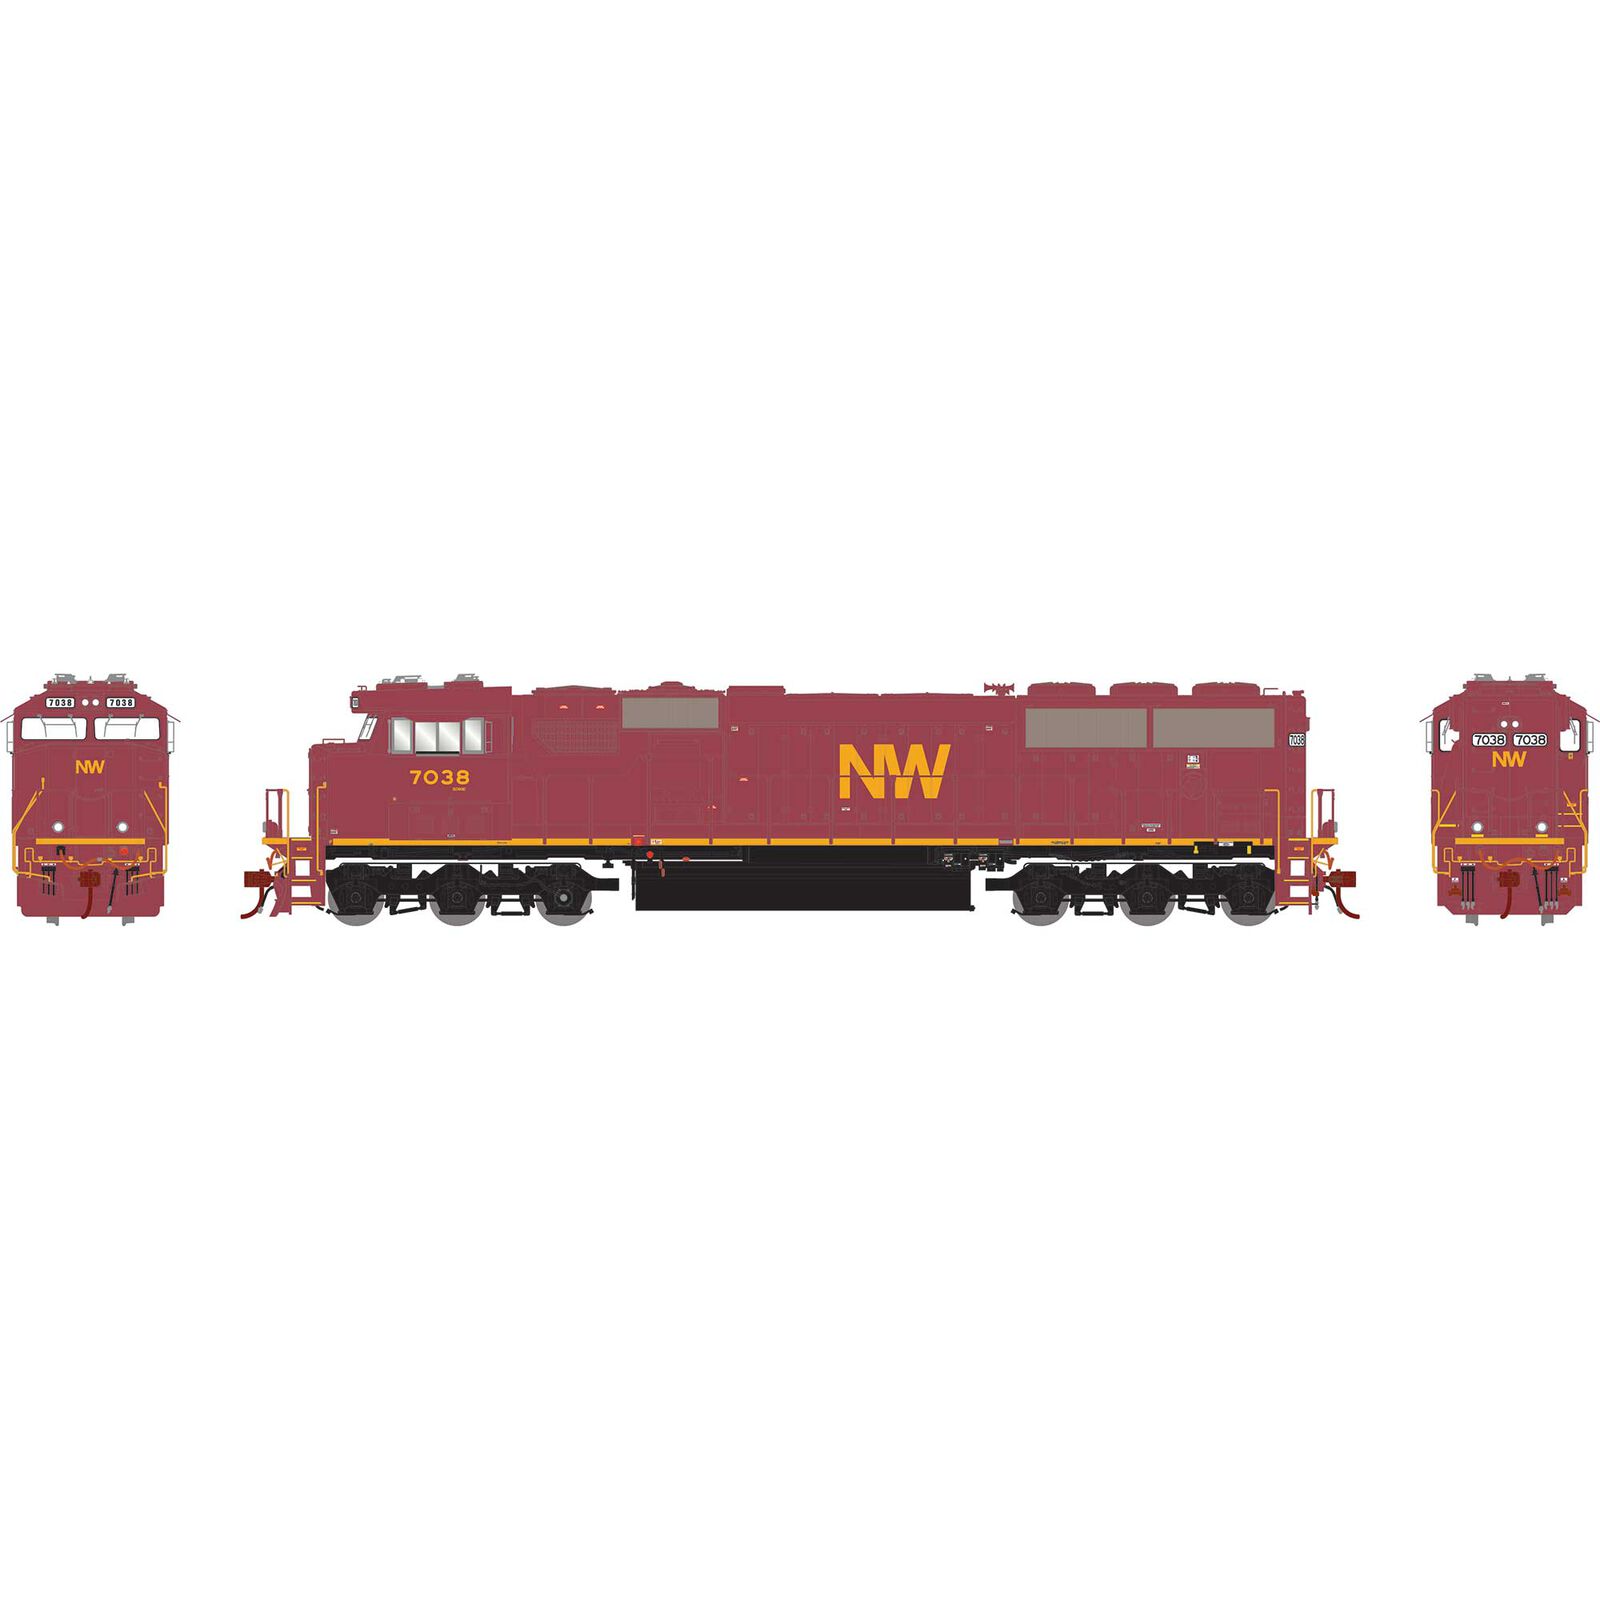 HO SD60E Locomotive, NS / NW / Heritage #7038